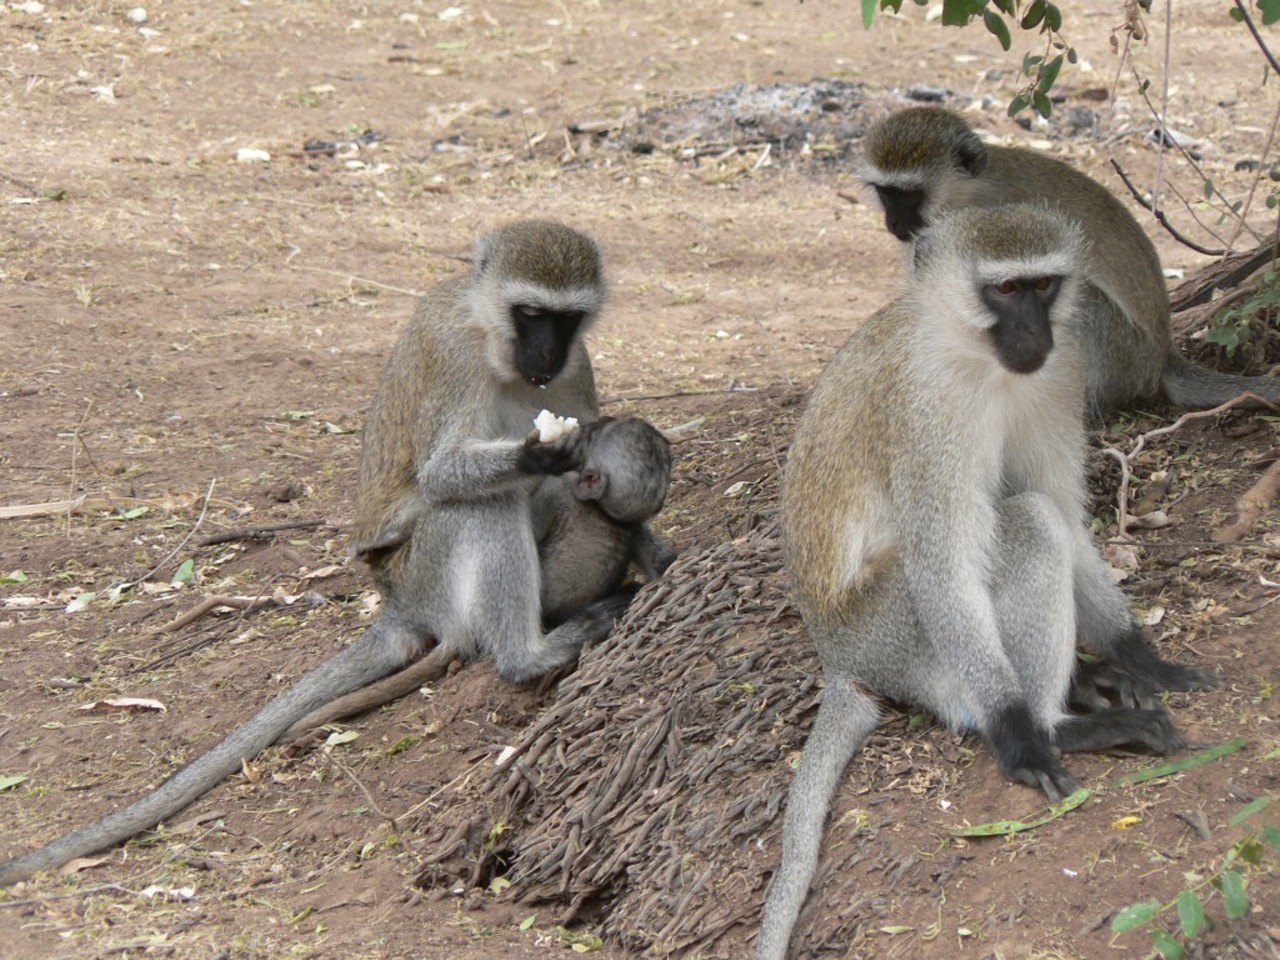 When Monkeys Attack
Vervet Monkey escapes, bites three in Rio Grande Valley